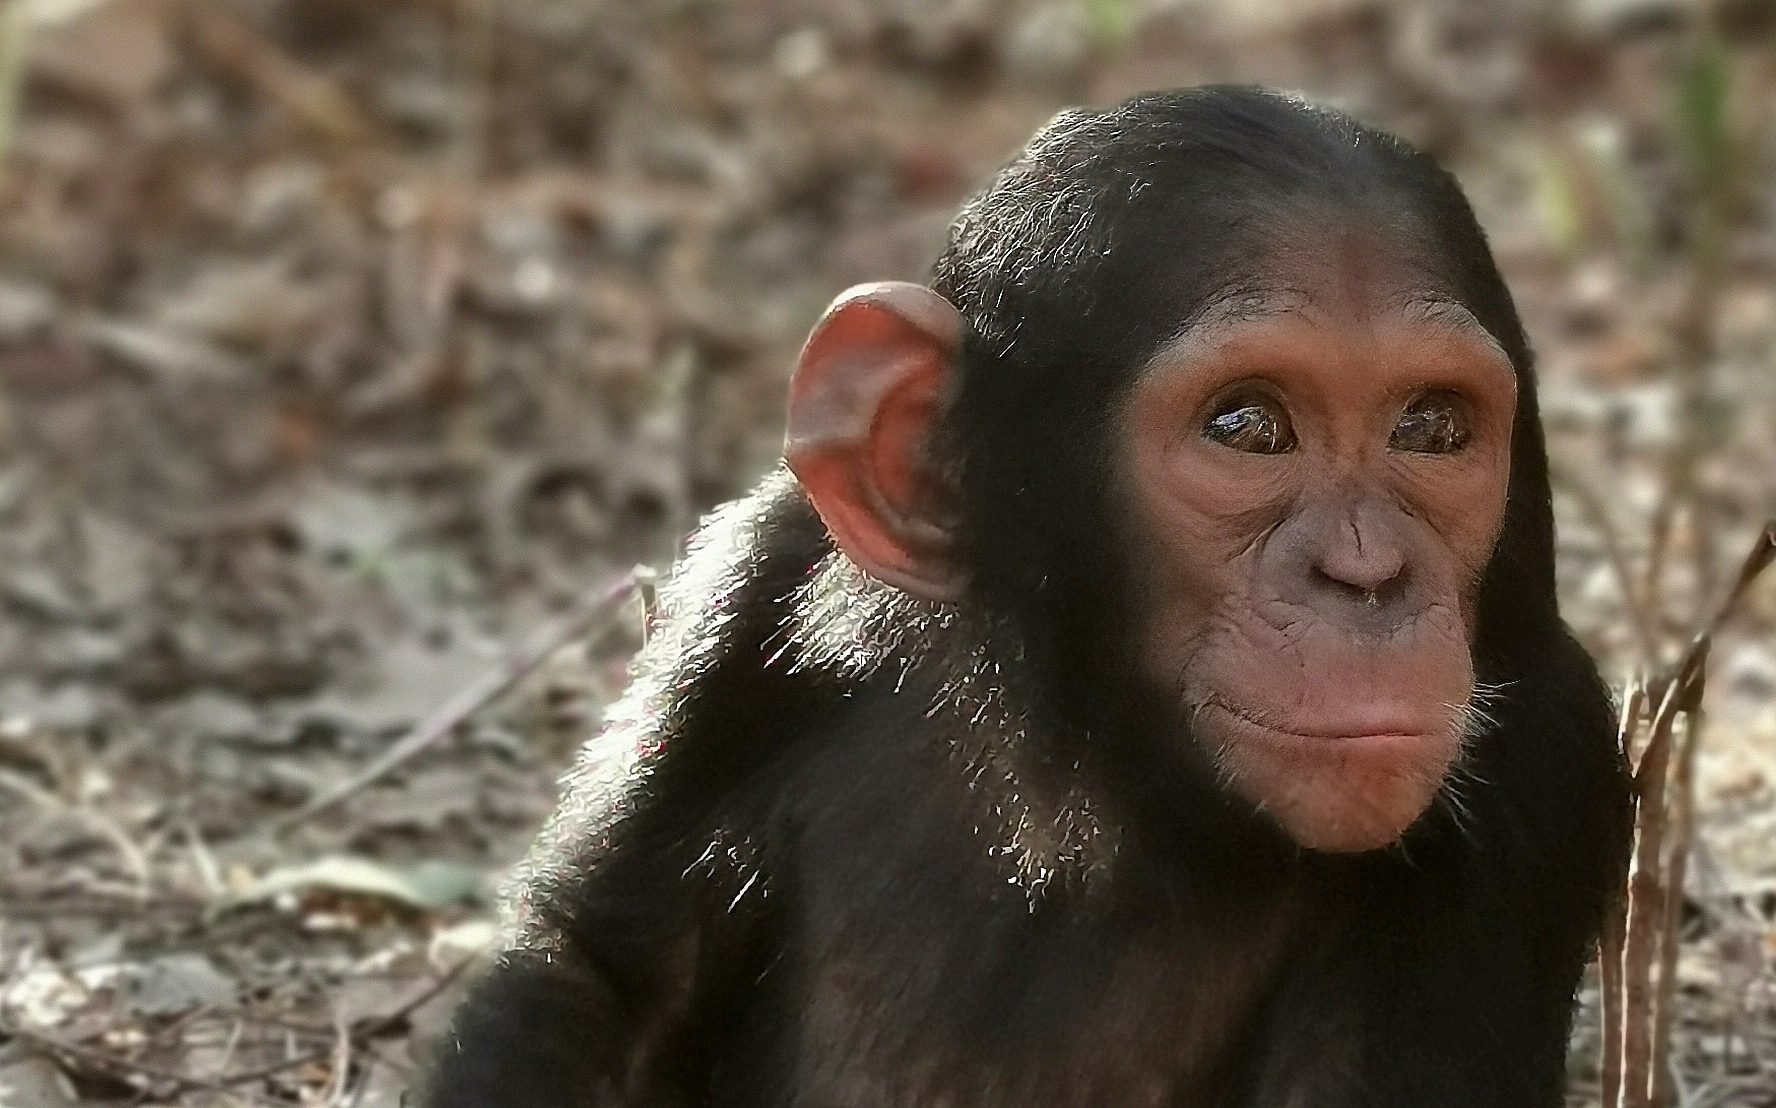 JACK chimp sanctuary in the DRC